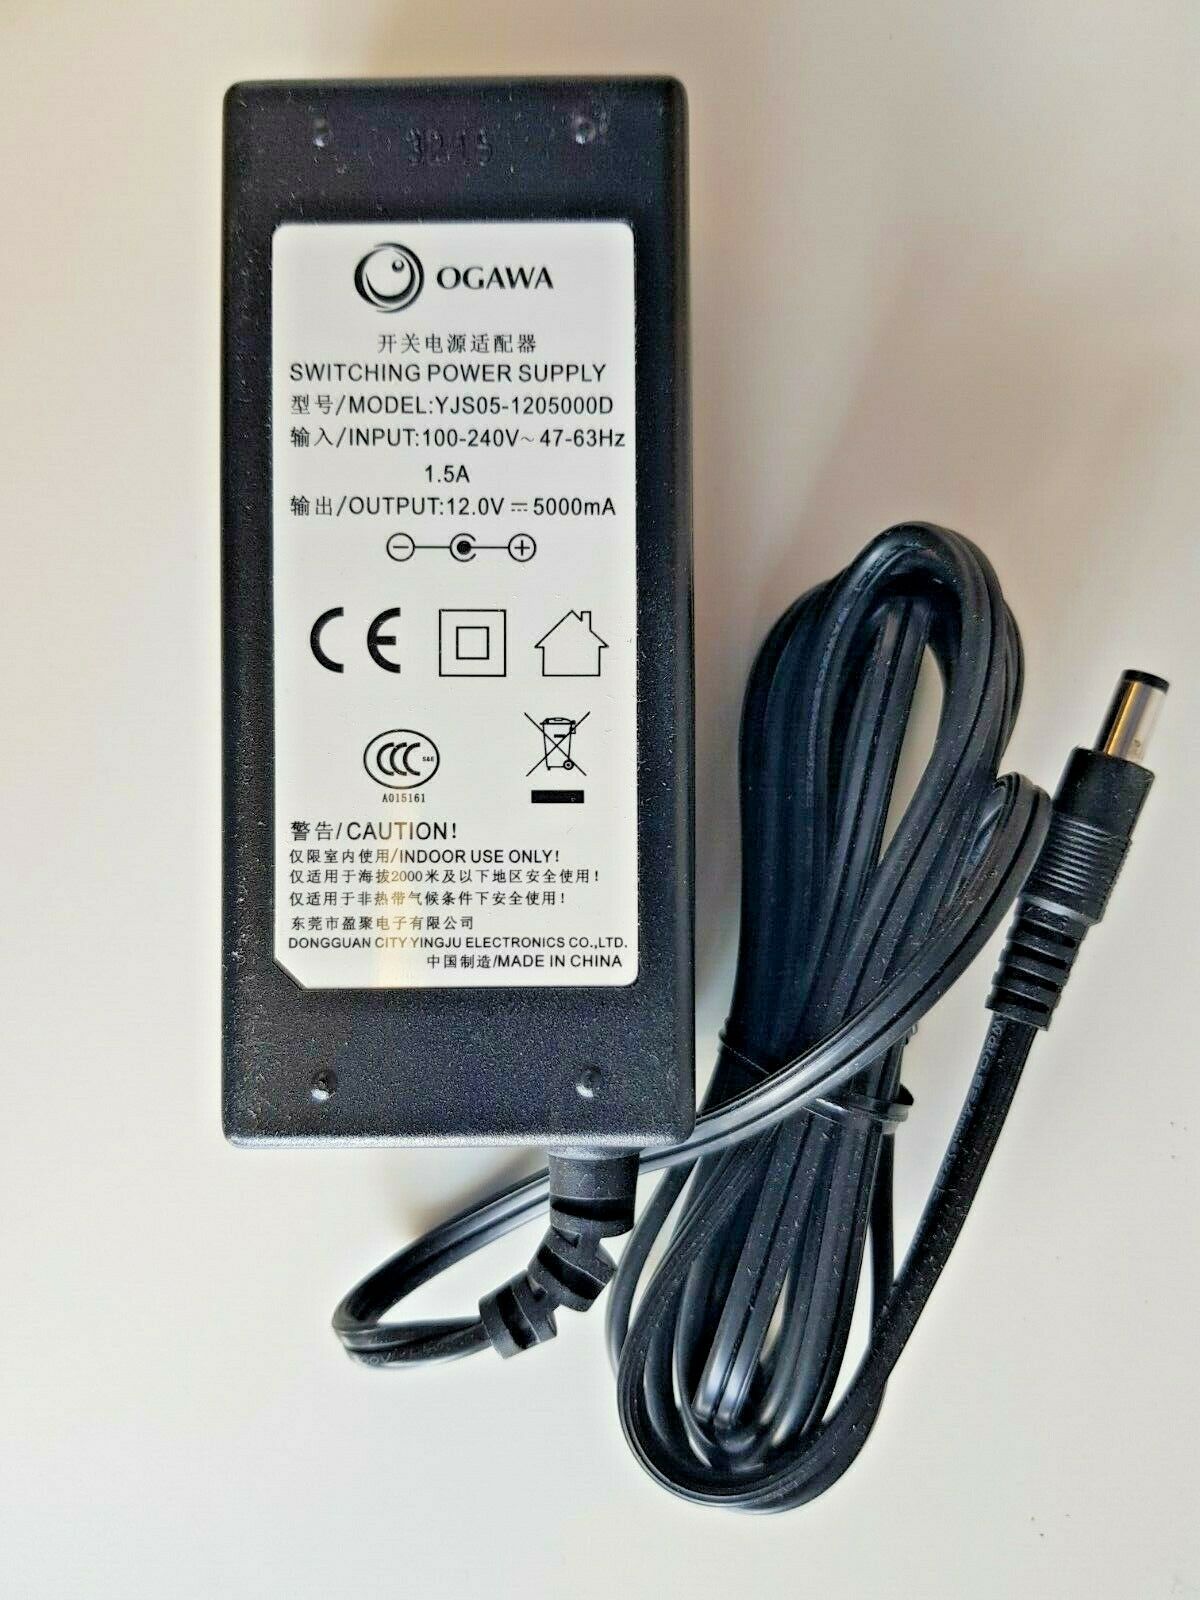 OGAWA 12.0V 5000mA Switching Power Supply Model YJS05-1205000D 12V 5A Compatible Brand: OGAWA Manufacturer Warranty: